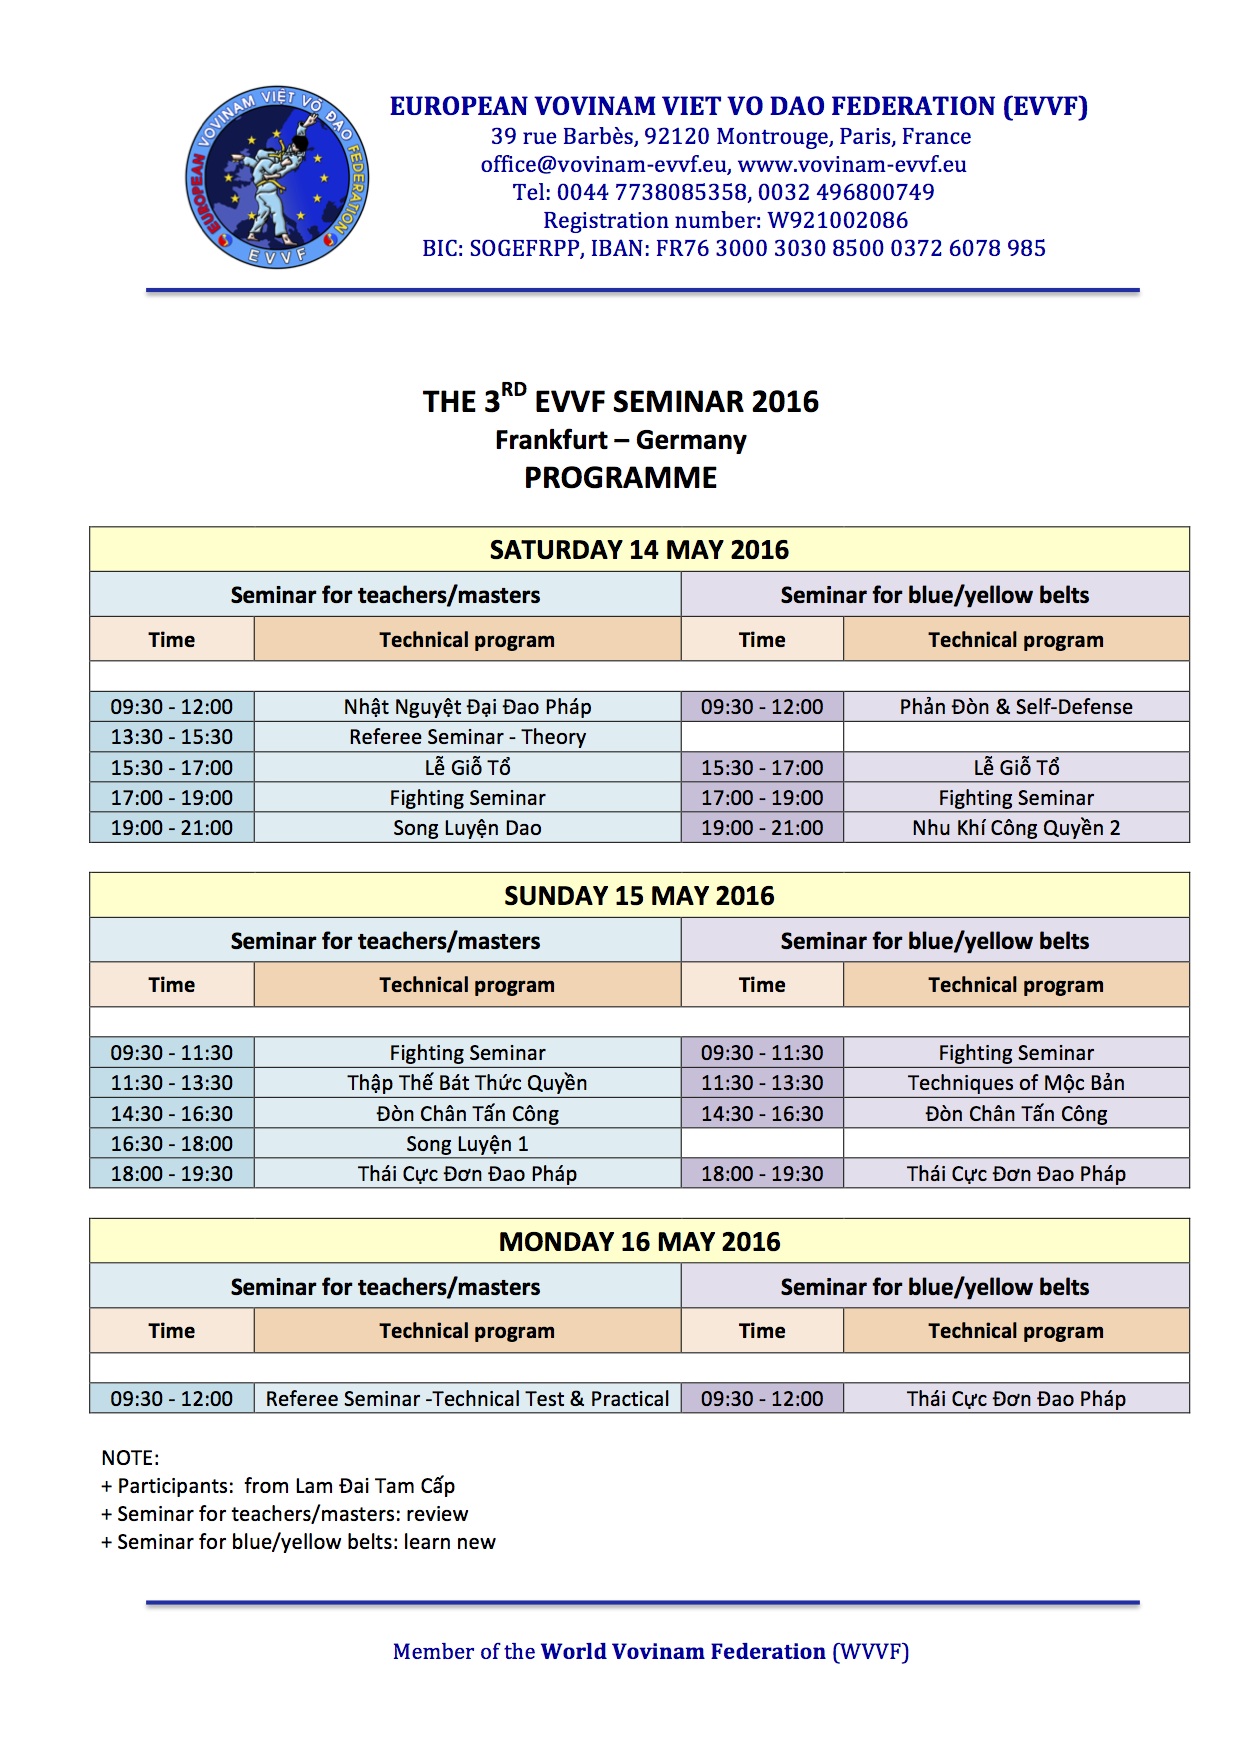 EVVF Seminar 2016 - Program